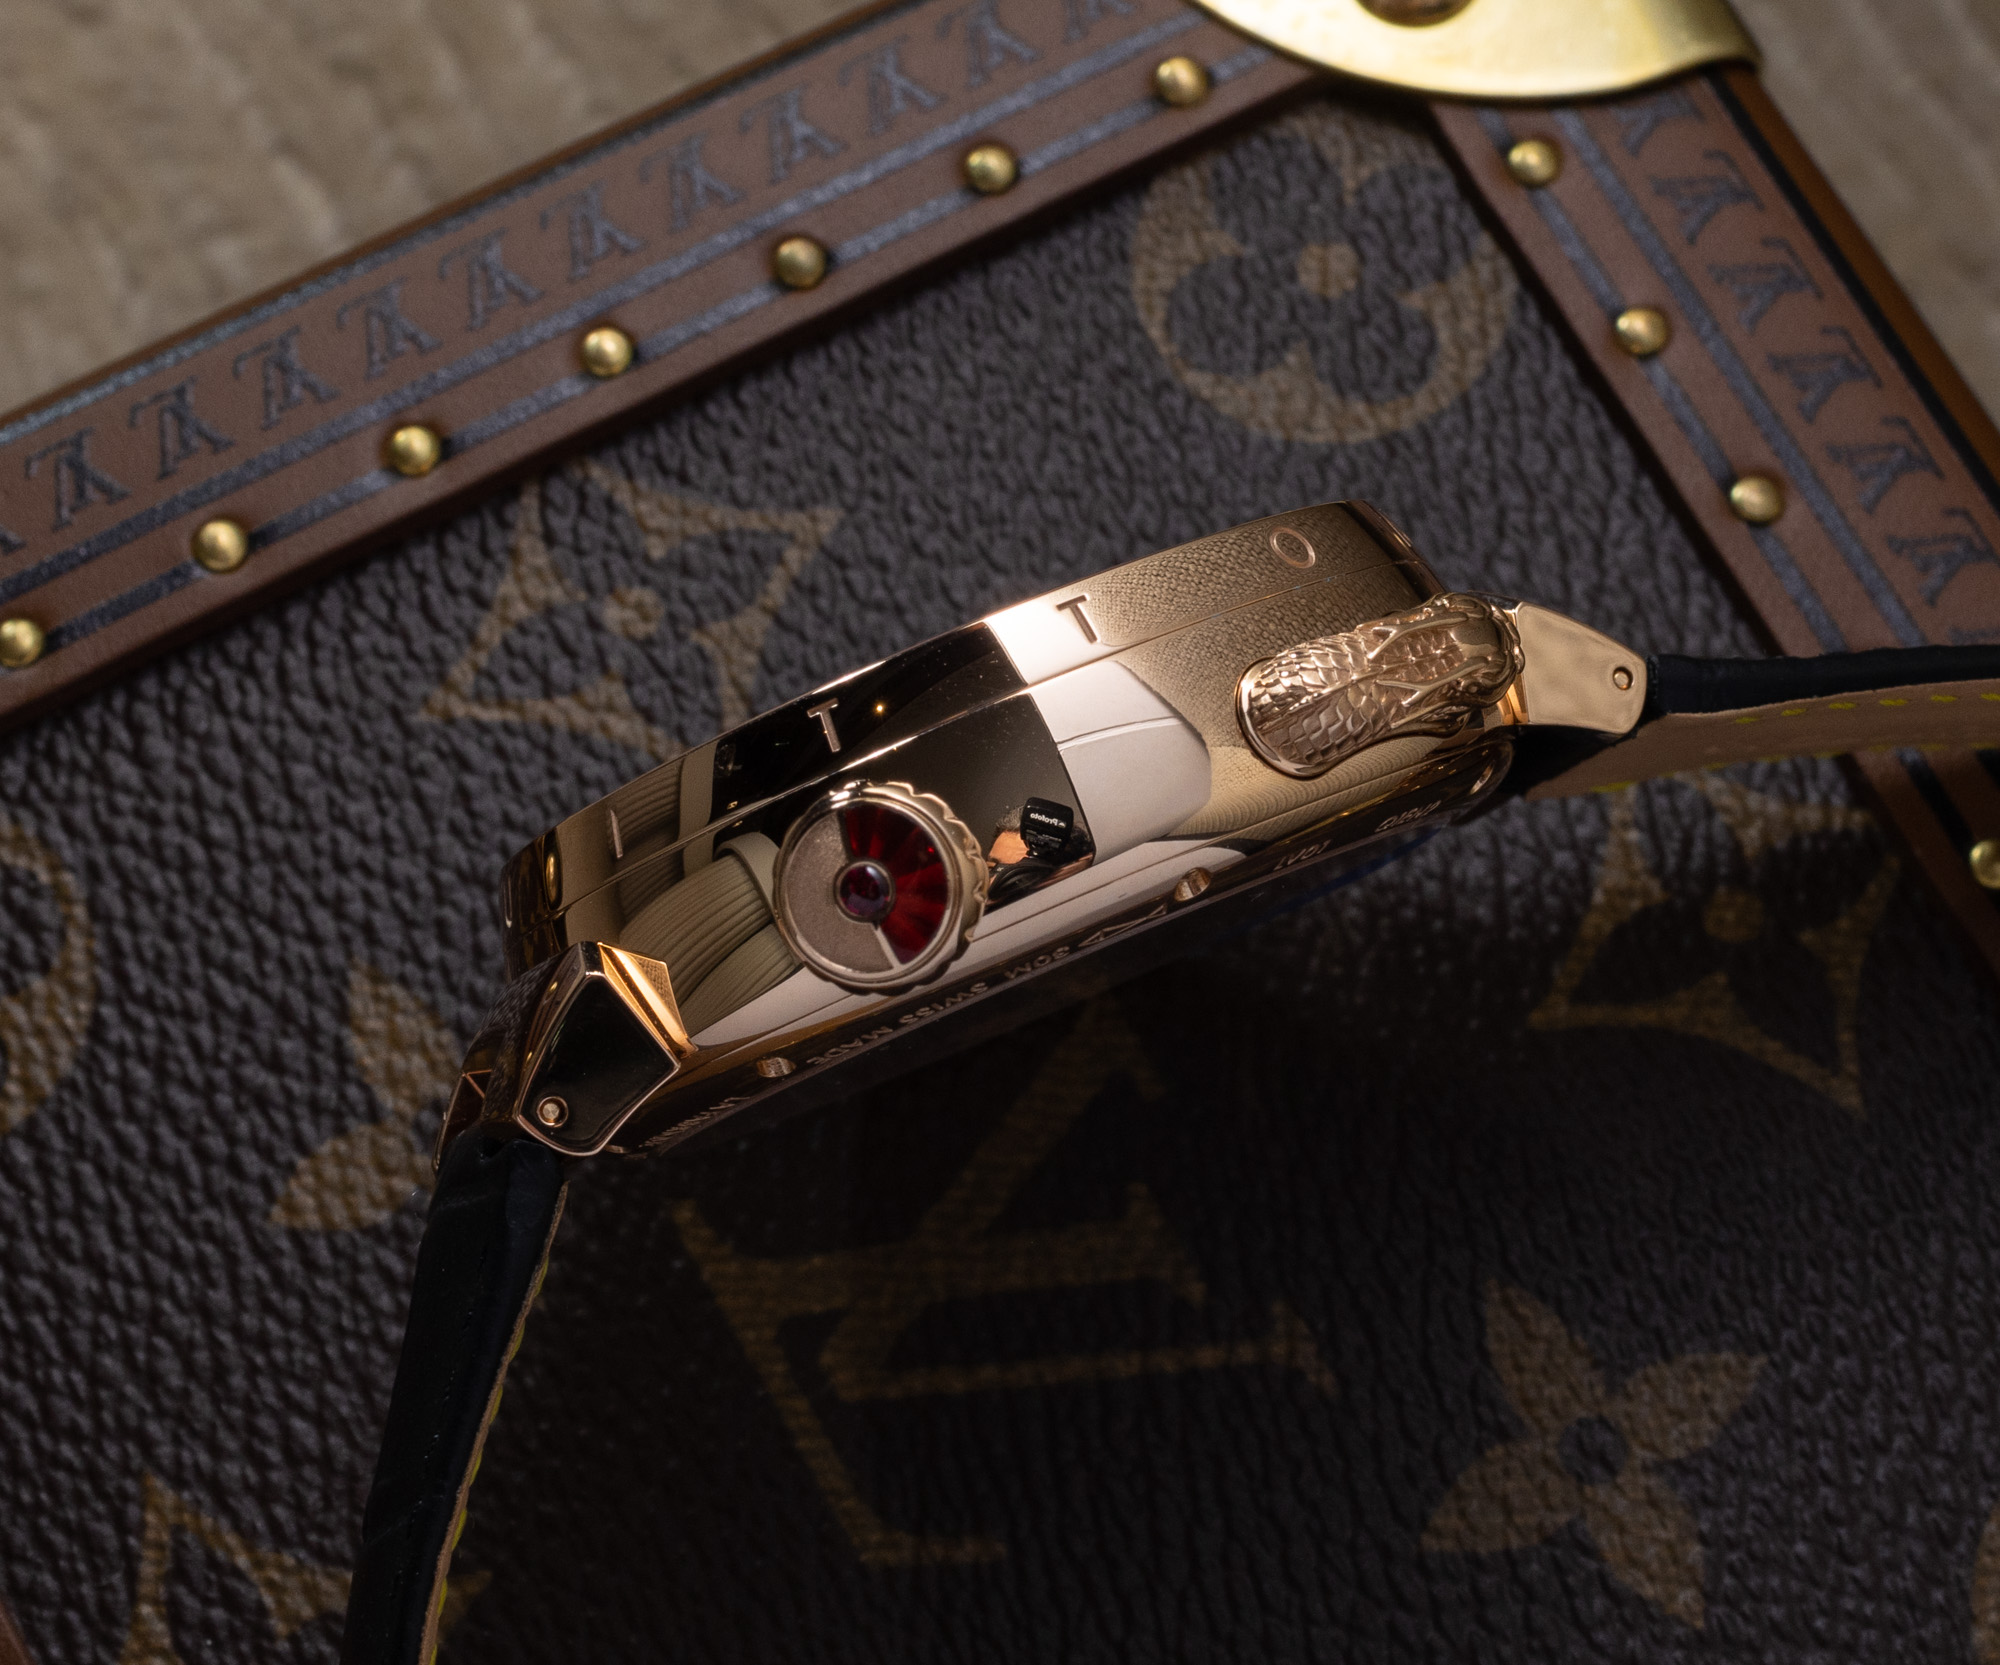 Louis Vuitton Tambour Opera Automata – Q1EN2Y – 575,620 USD – The Watch  Pages